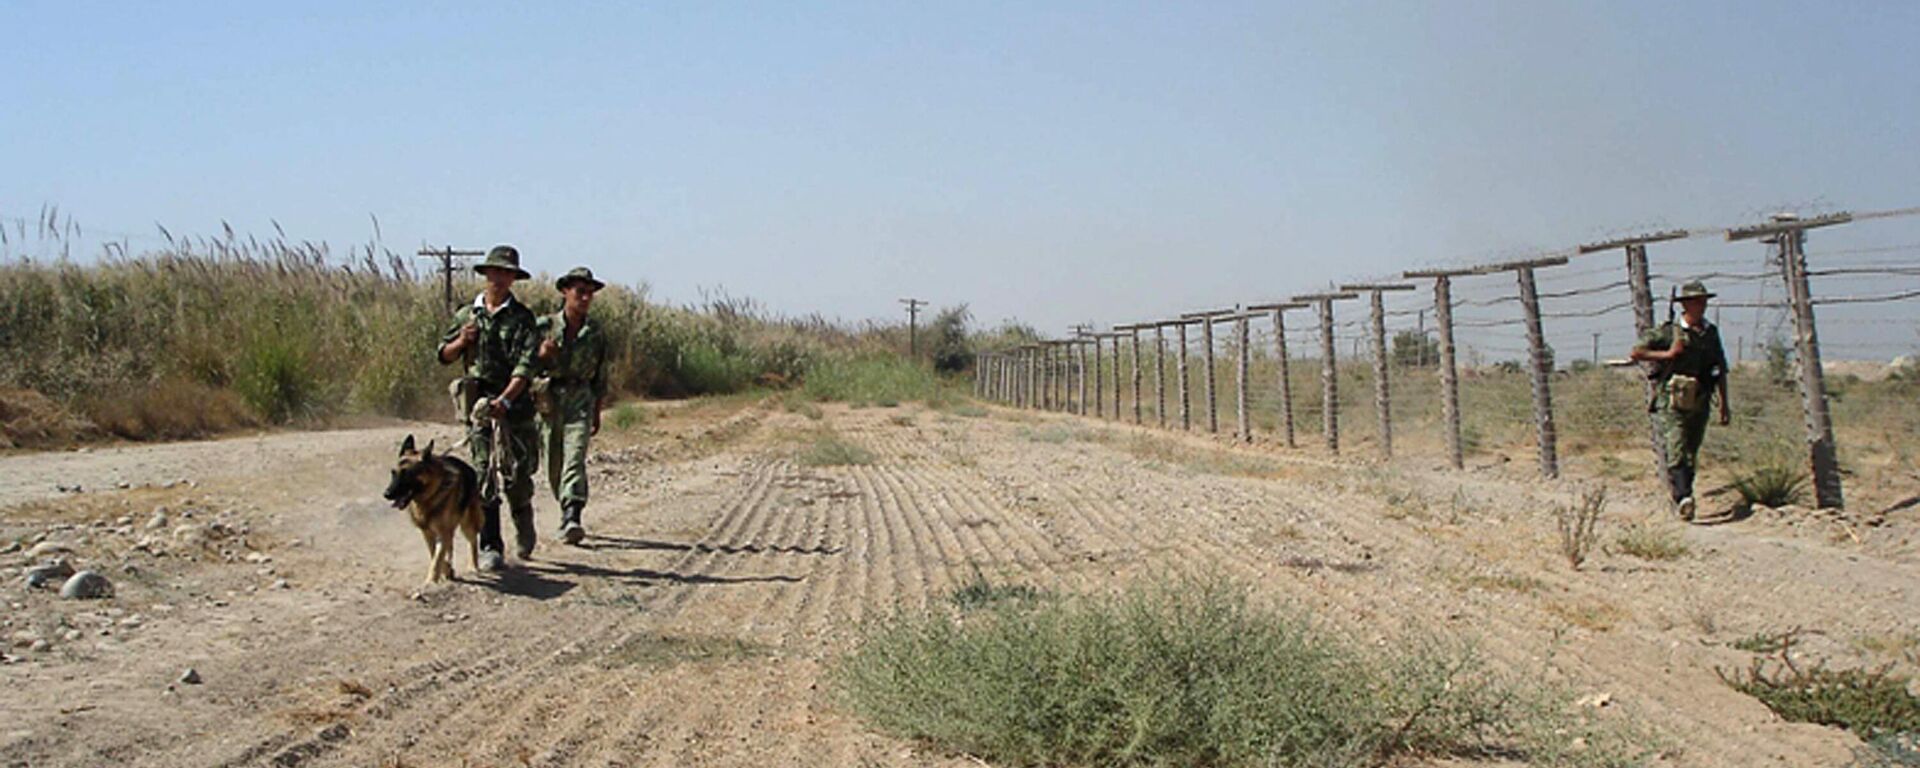 Таджикские пограничник на границе с Афганистаном - Sputnik Узбекистан, 1920, 07.07.2021